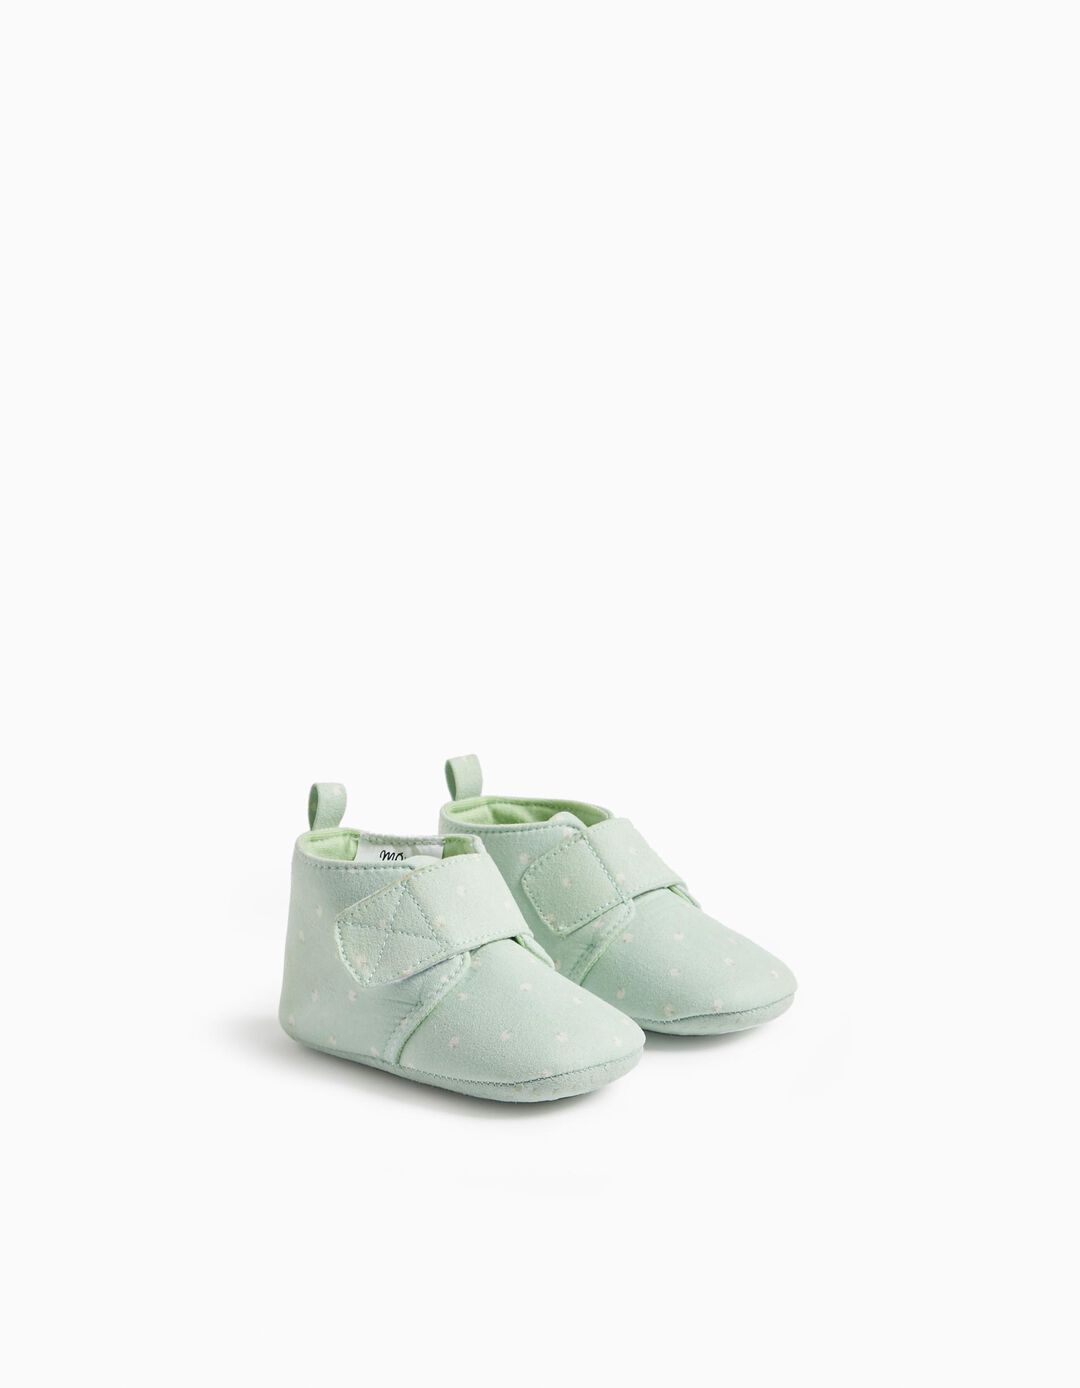 Pantufas-bota Estampadas, Bebé Menina, Verde Claro